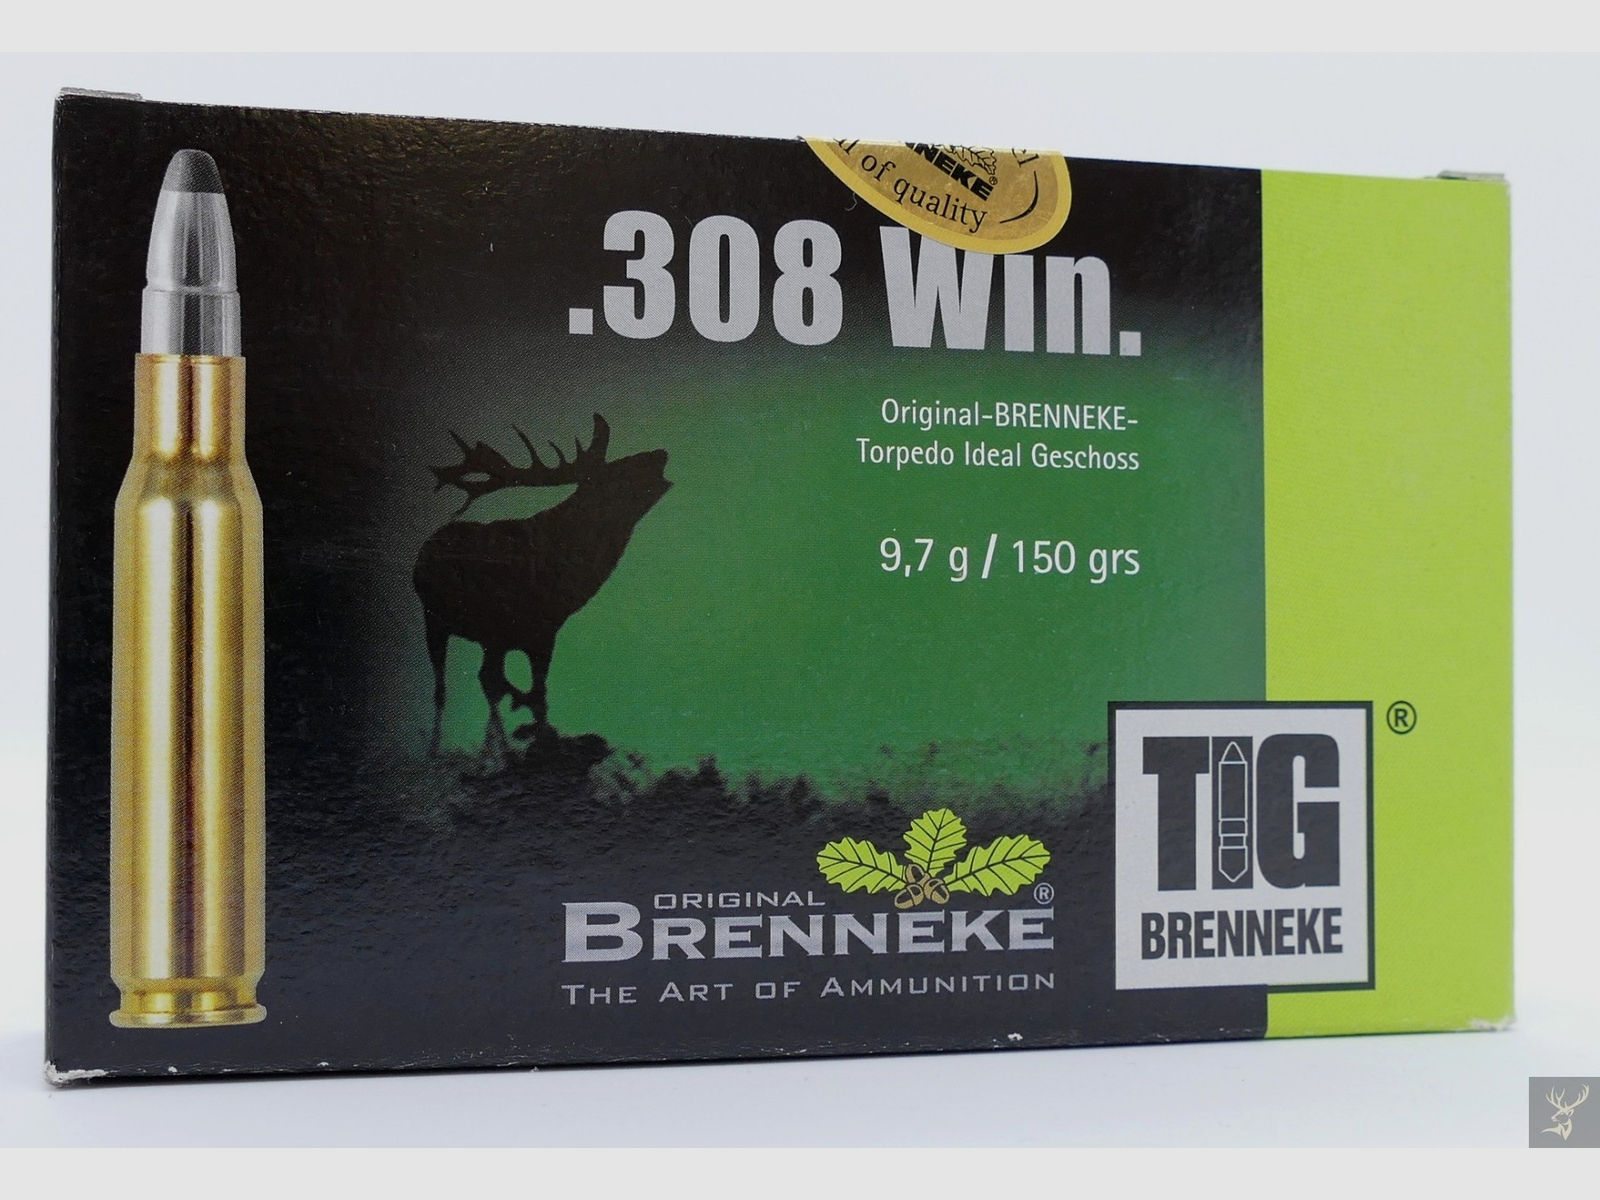 Brenneke .308 Win TIG 9,7g/150gr